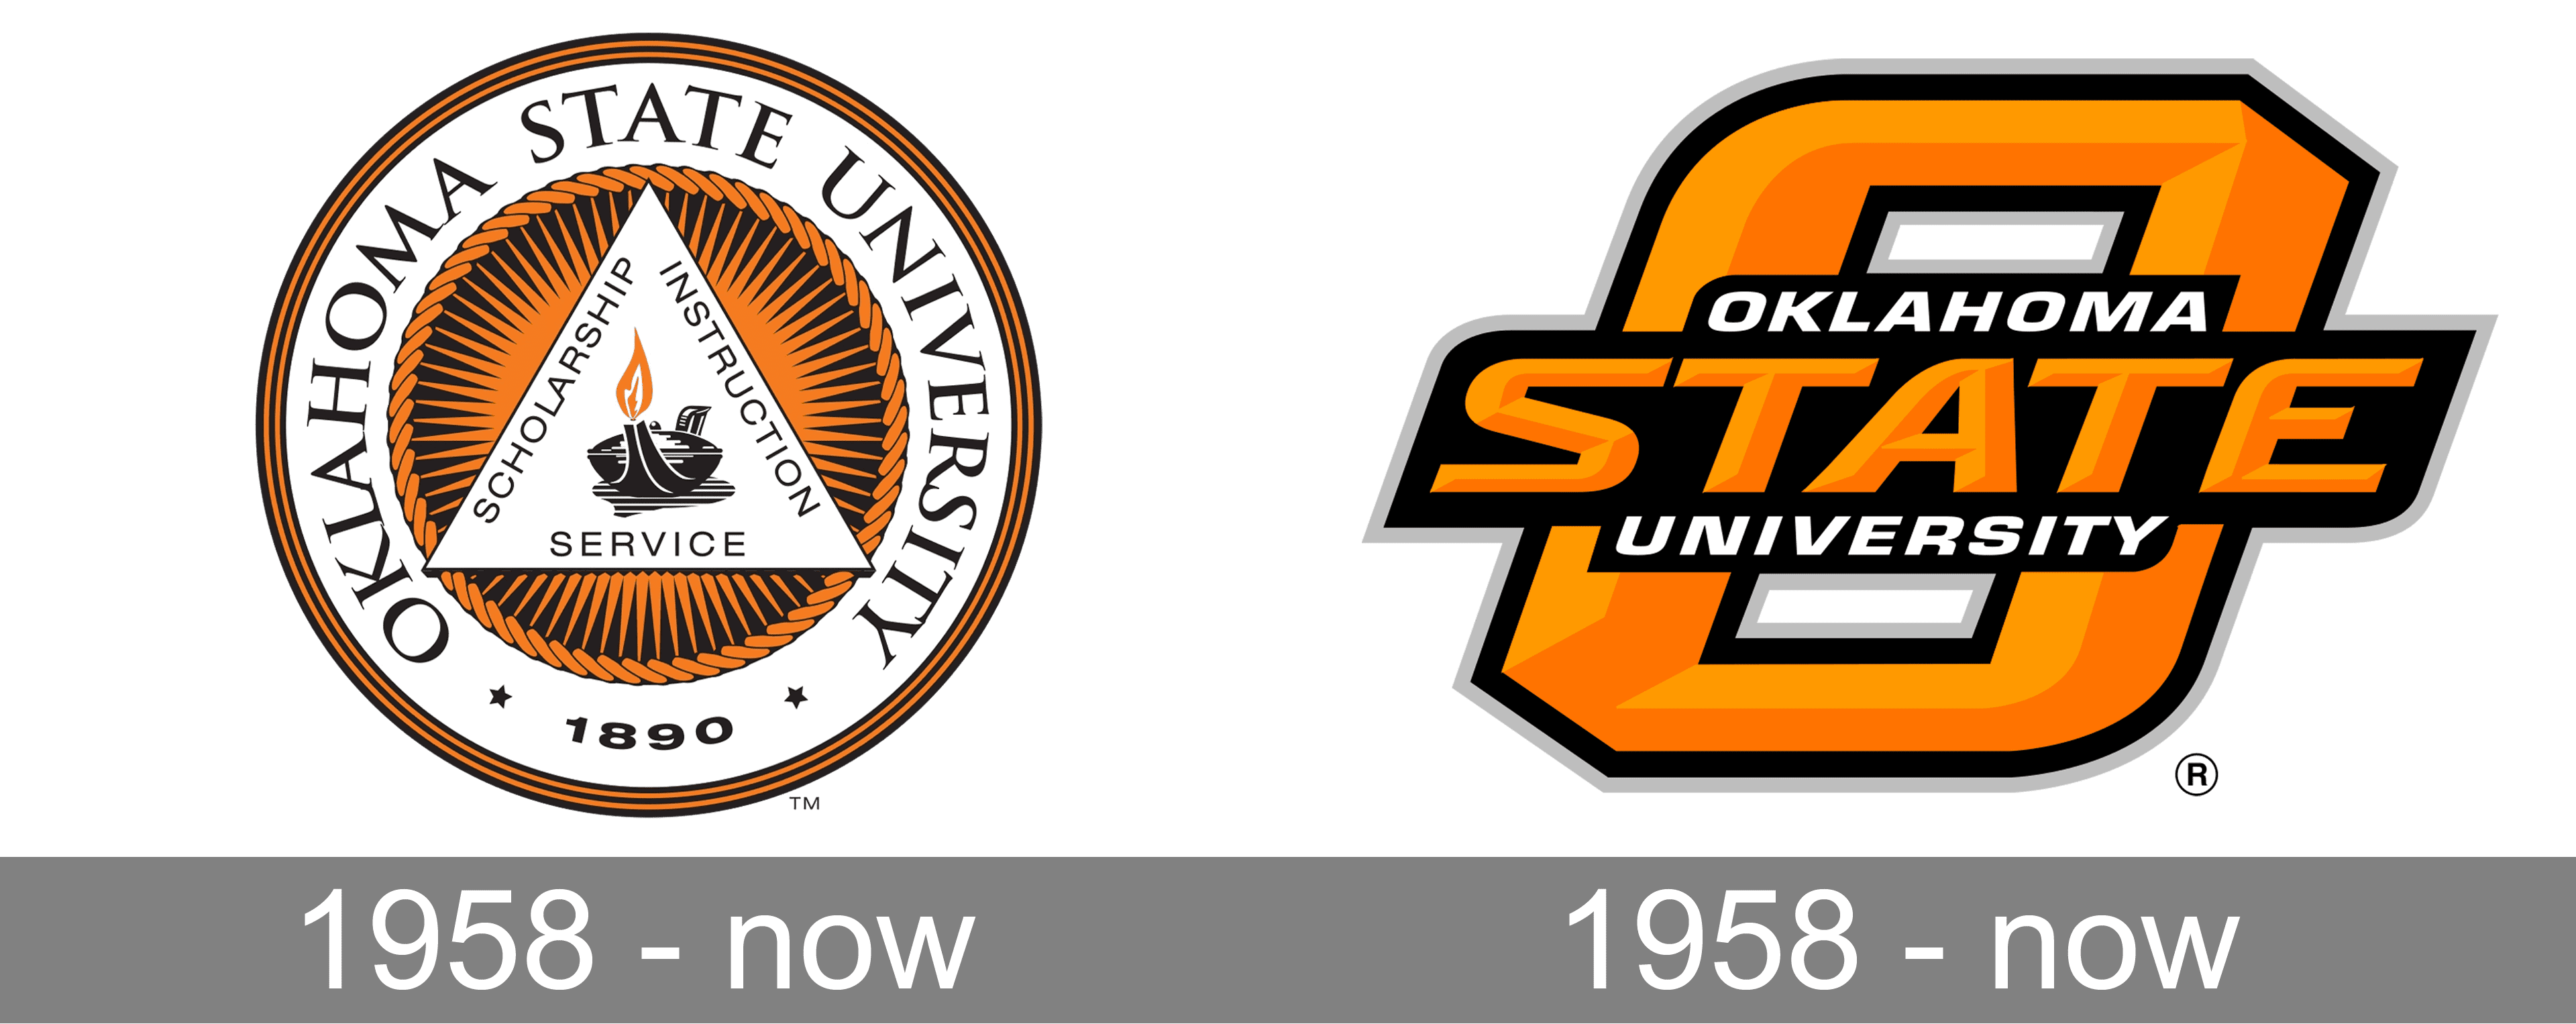 New OSU/A&M Benefits App  Oklahoma State University